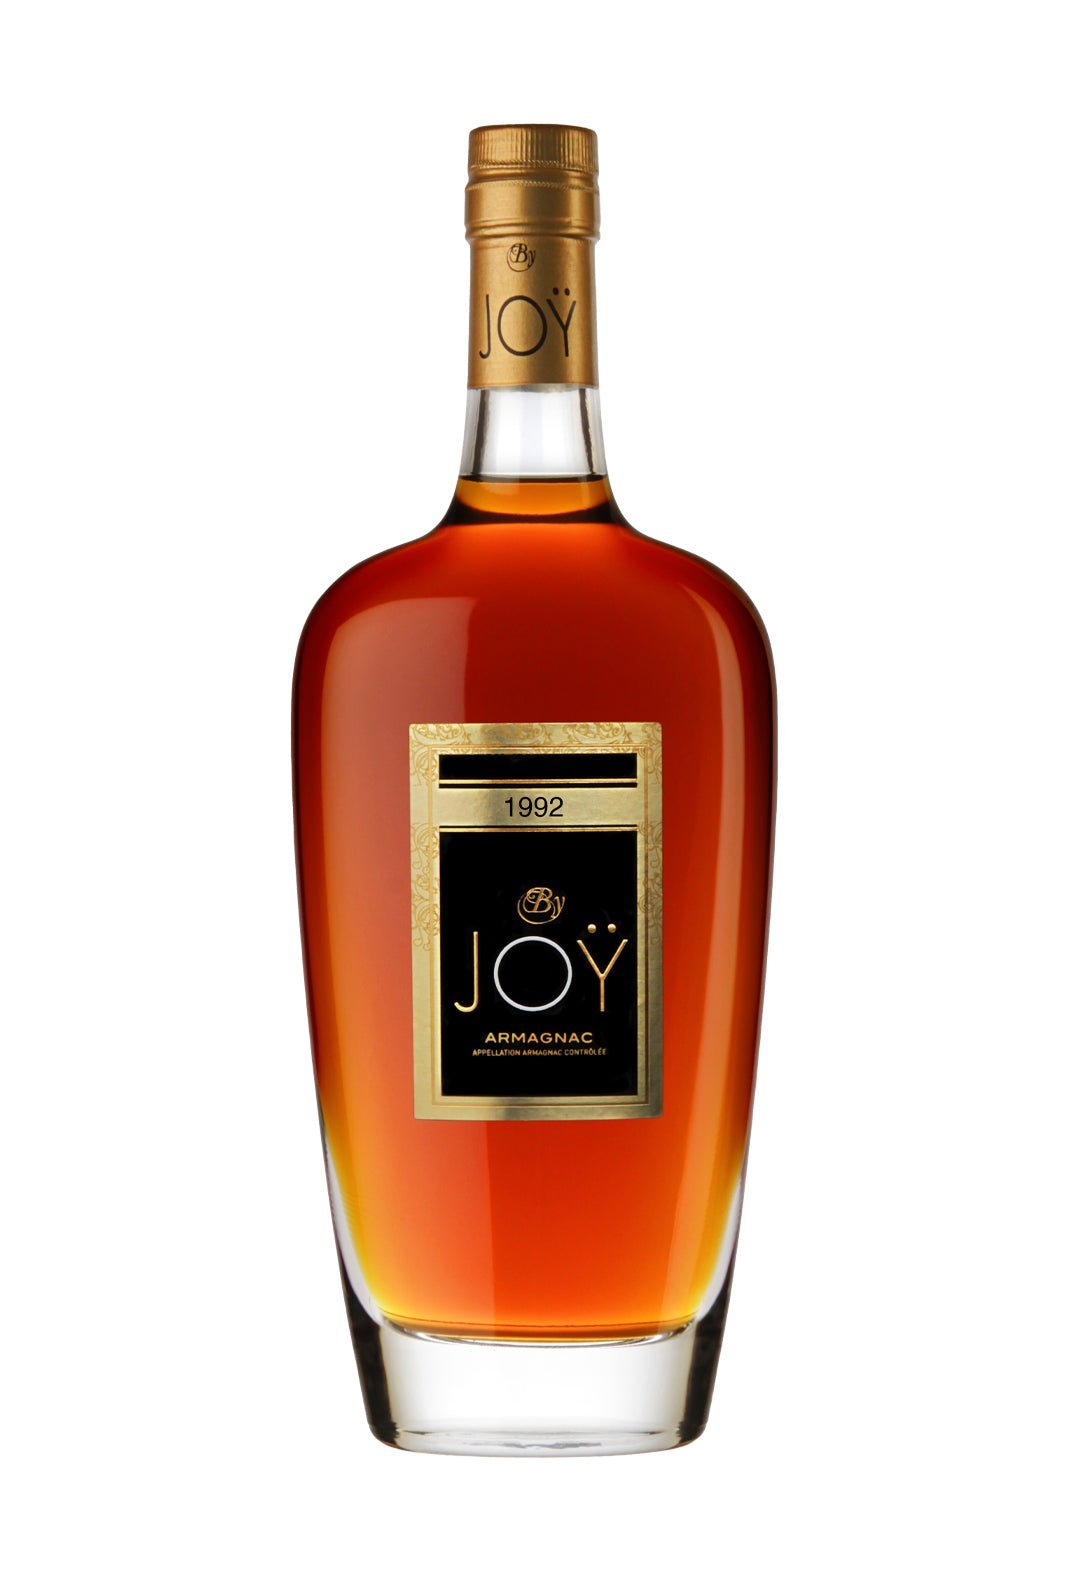 Domaine de Joy 1992 Armagnac 40.5% 700ml | Brandy | Shop online at Spirits of France